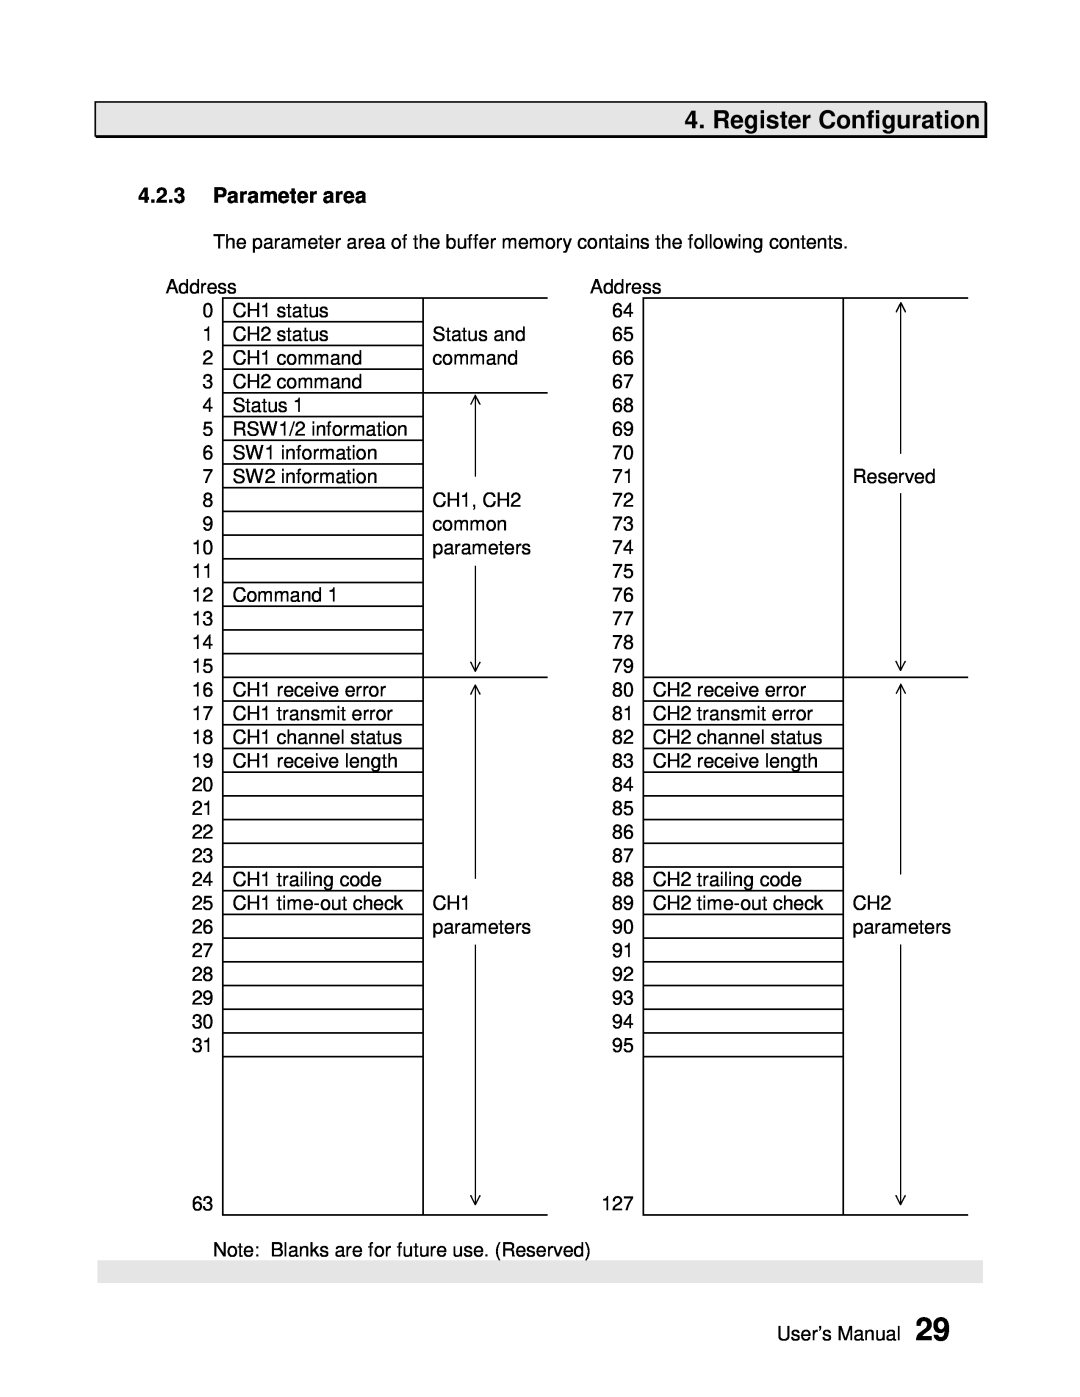 Toshiba AS311 user manual Parameter area, Register Configuration 